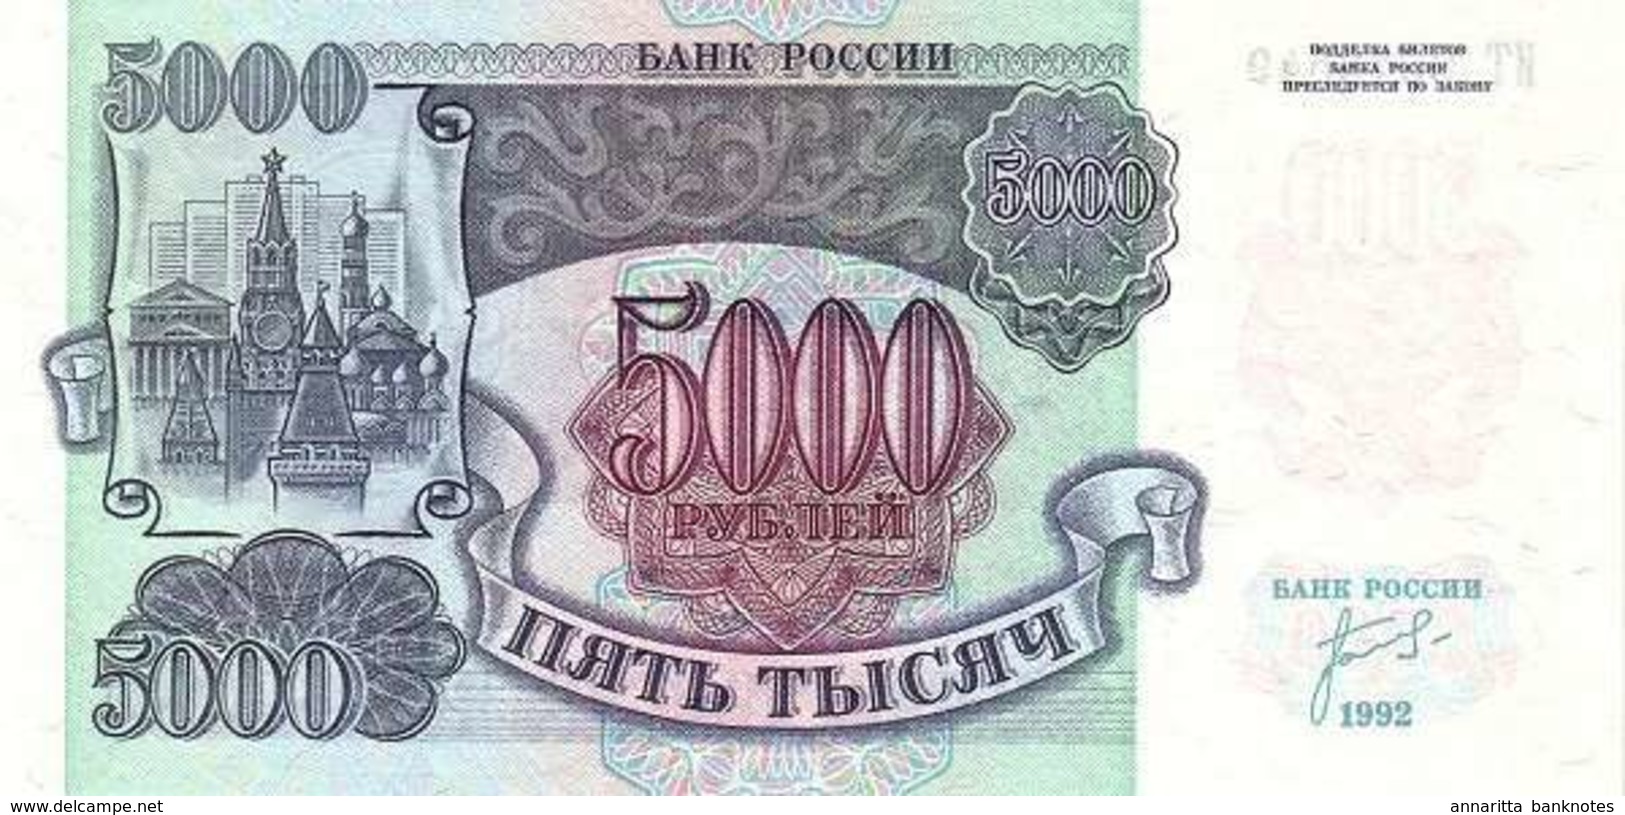 Russia (Россия) 5000 Pублей (Rubles) 1992, UNC, P-252a, RU801a - Russia